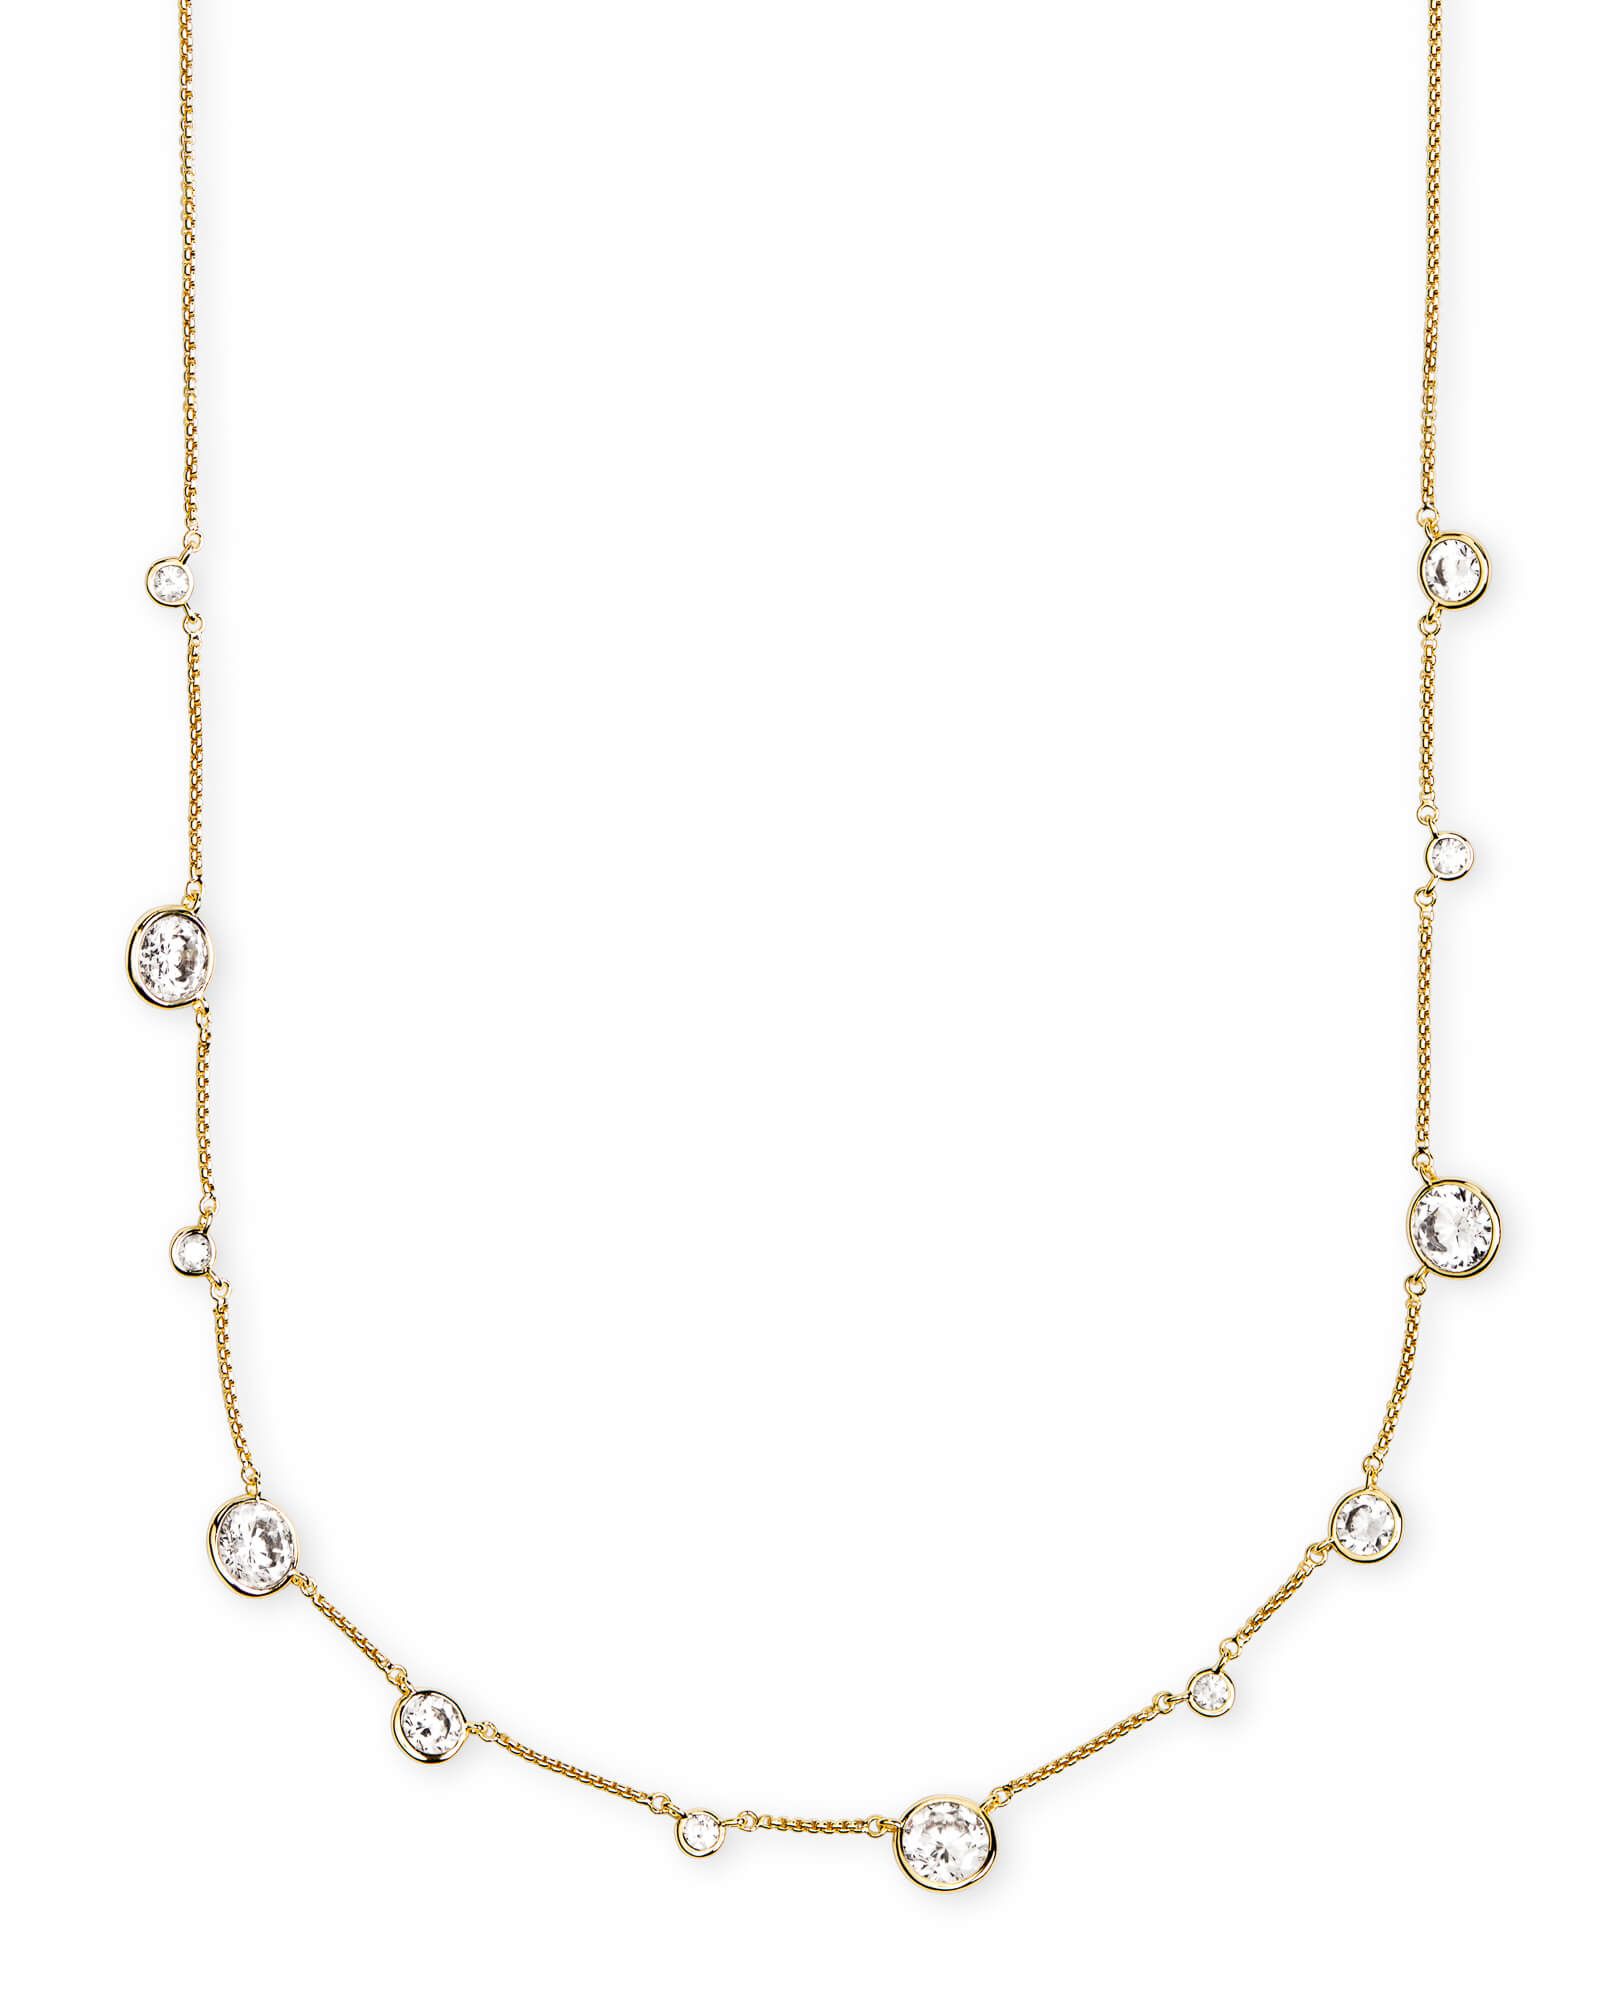 Clementine Choker Necklace in Gold | Kendra Scott | Kendra Scott